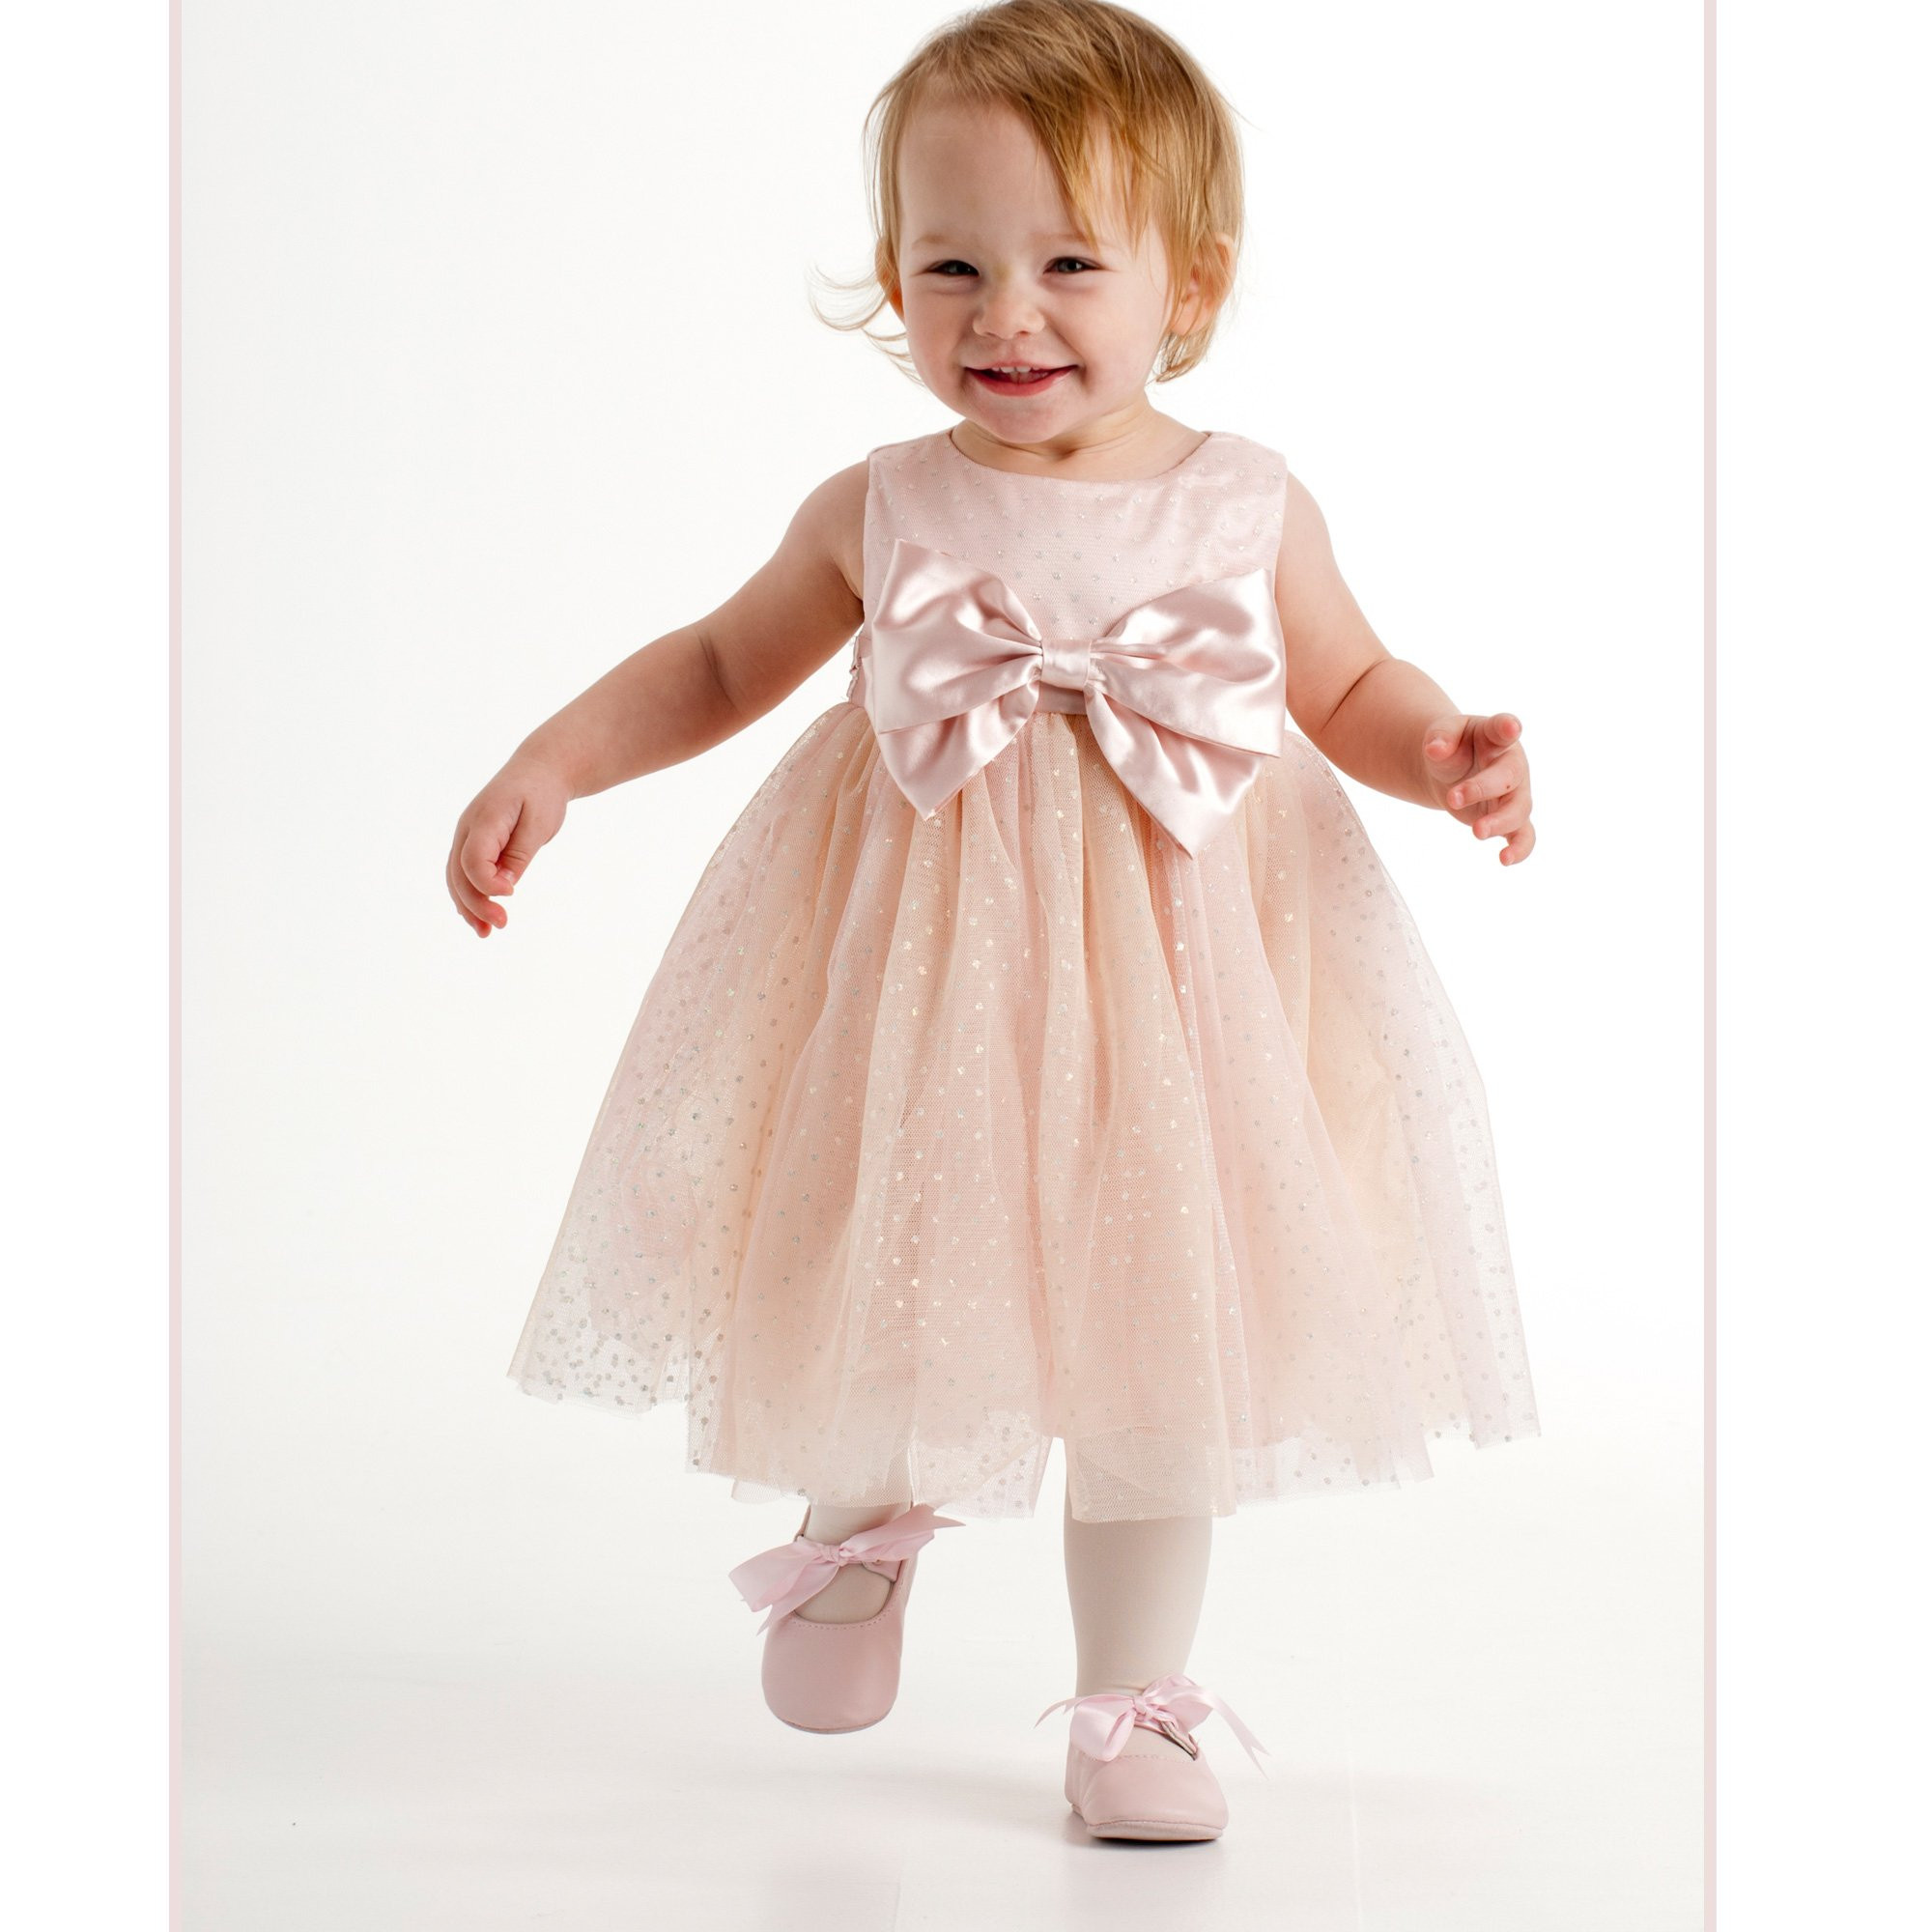 Biscotti Baby Dress
 Biscotti Princess Party Baby Dress